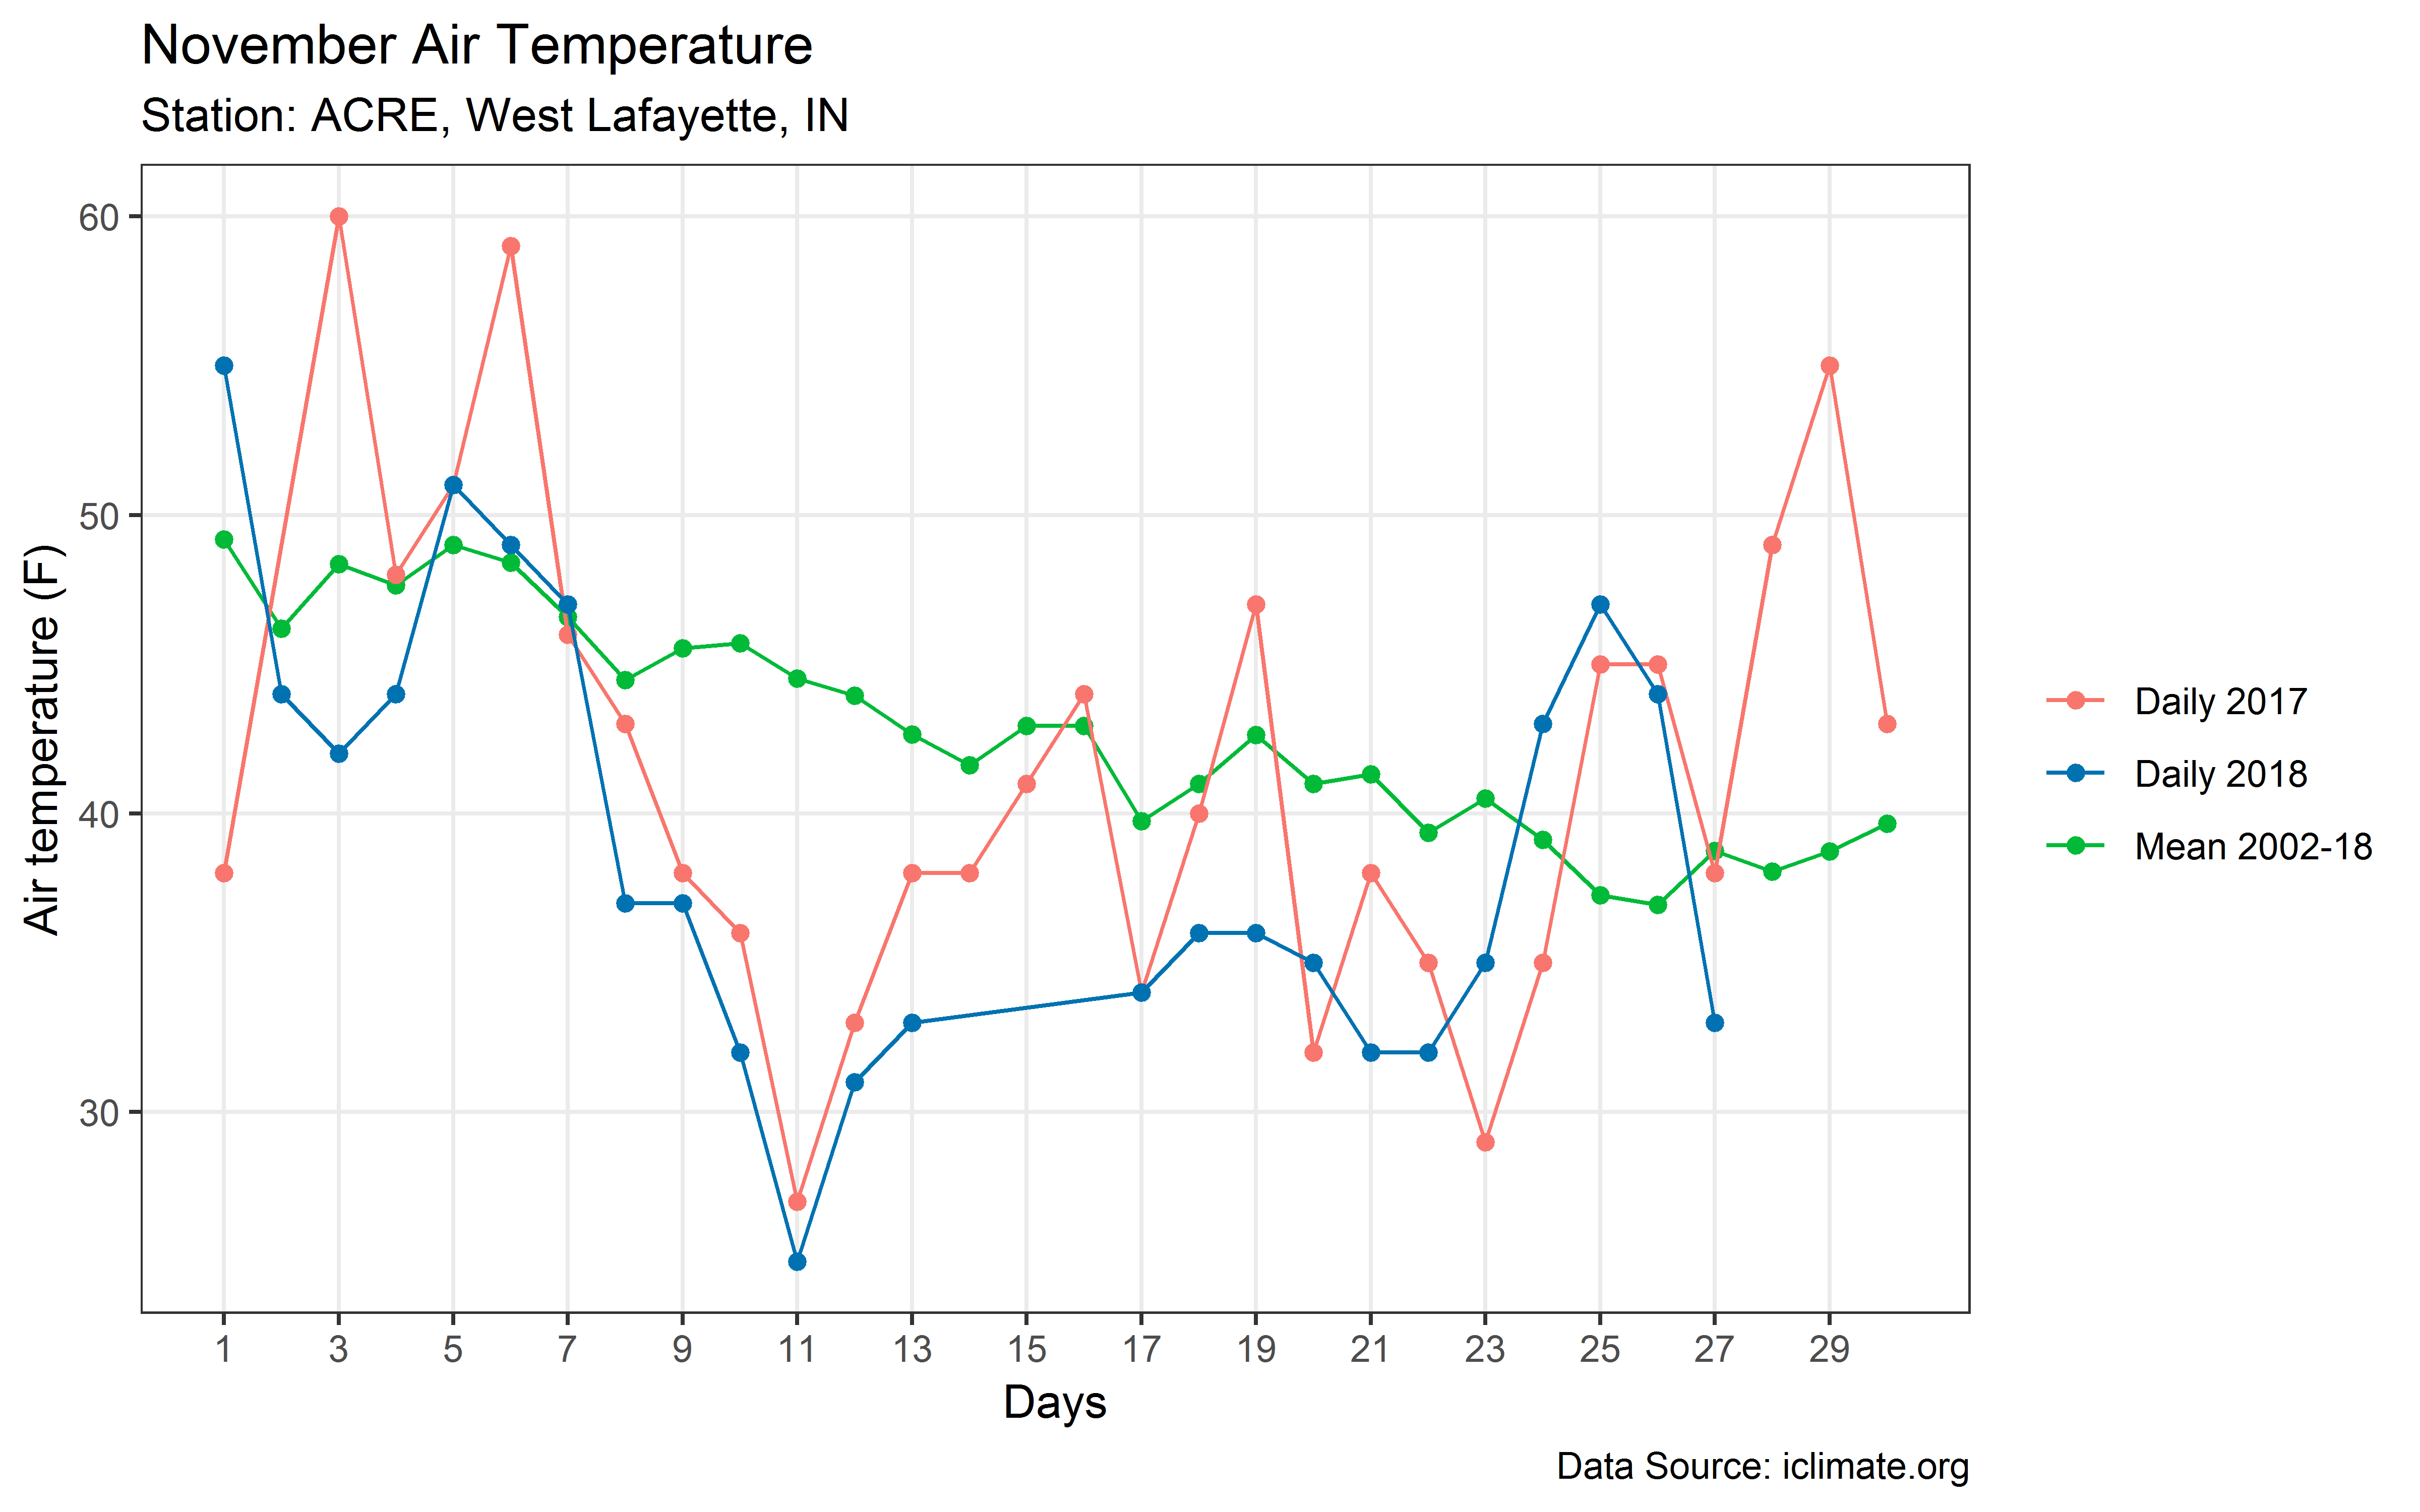 November 2018 air temperature